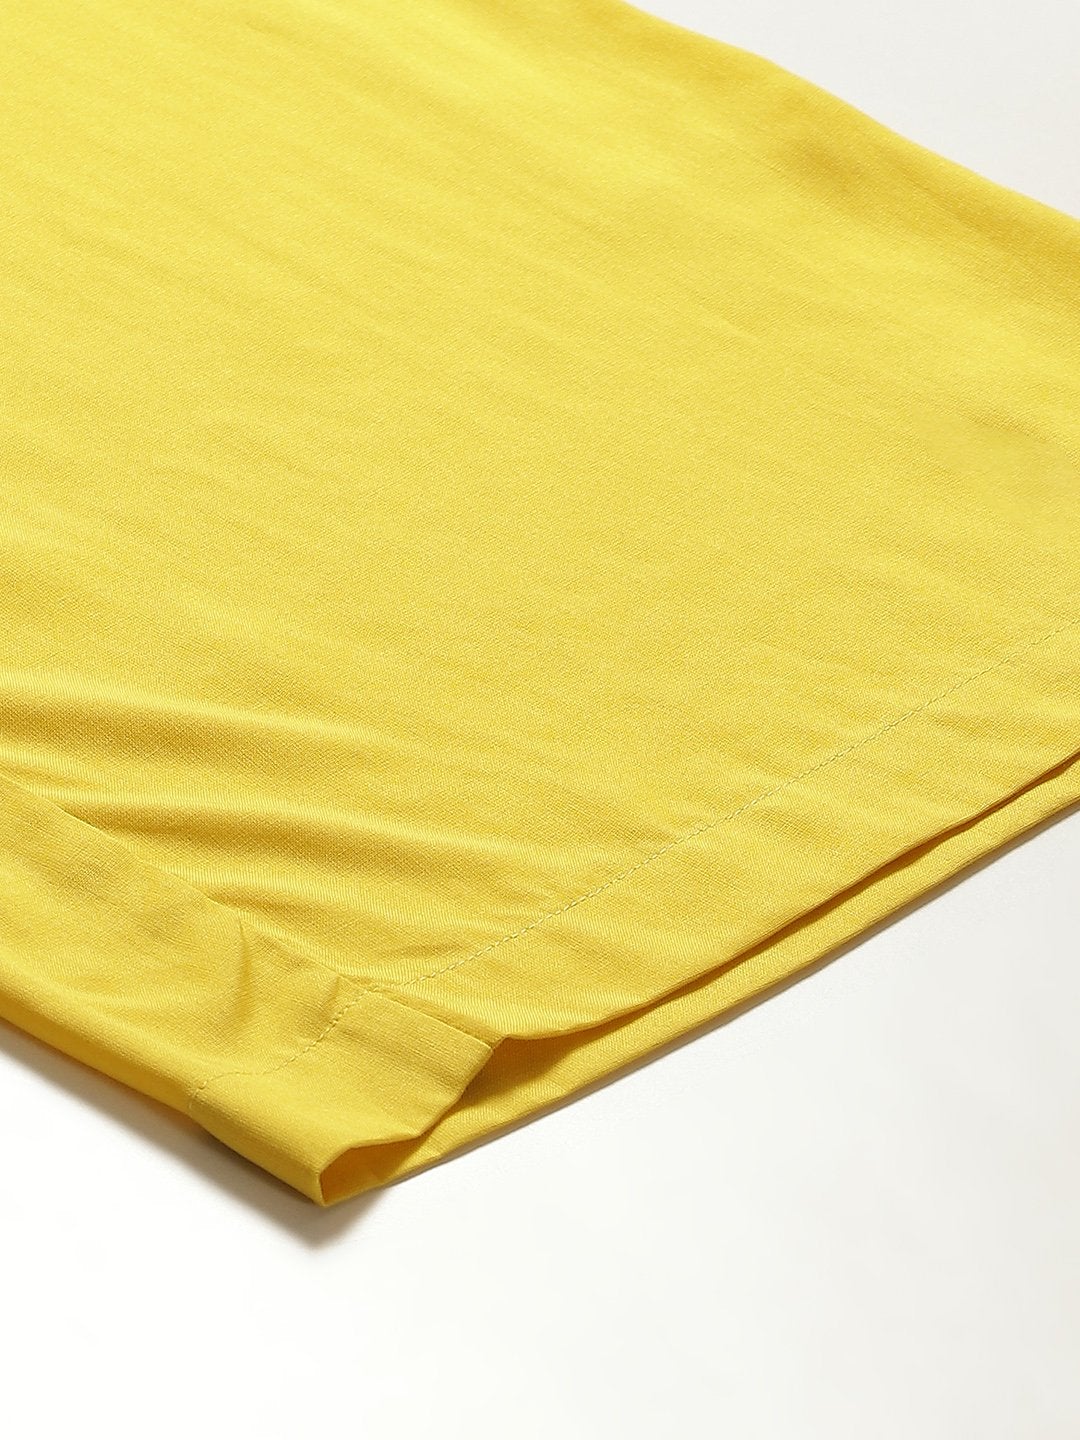 Women's Yellow Front Button Pleated Culottes - SASSAFRAS